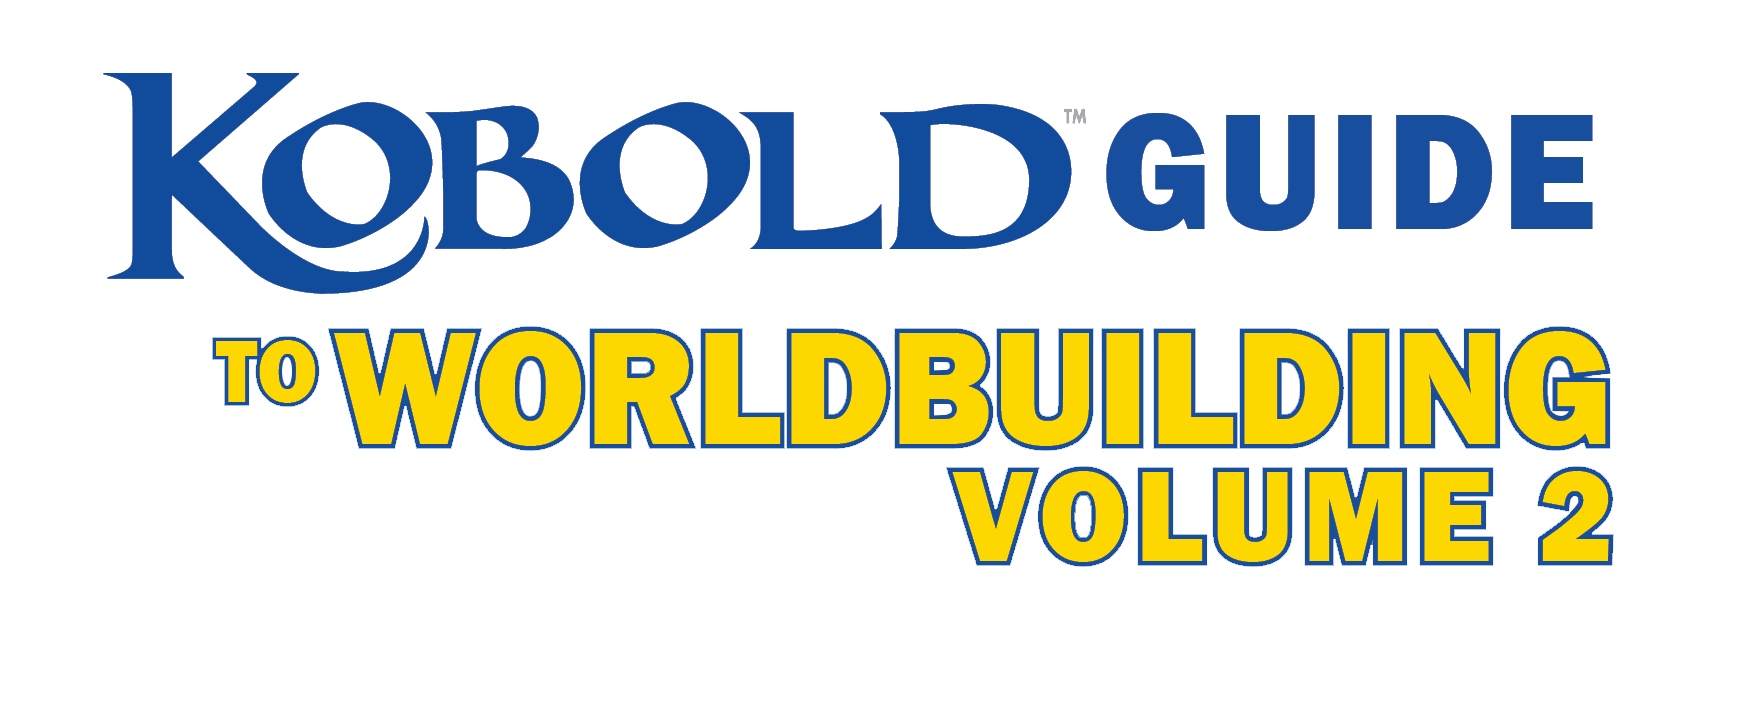 Kobold Guide to Wolrdbuilding Volume 2